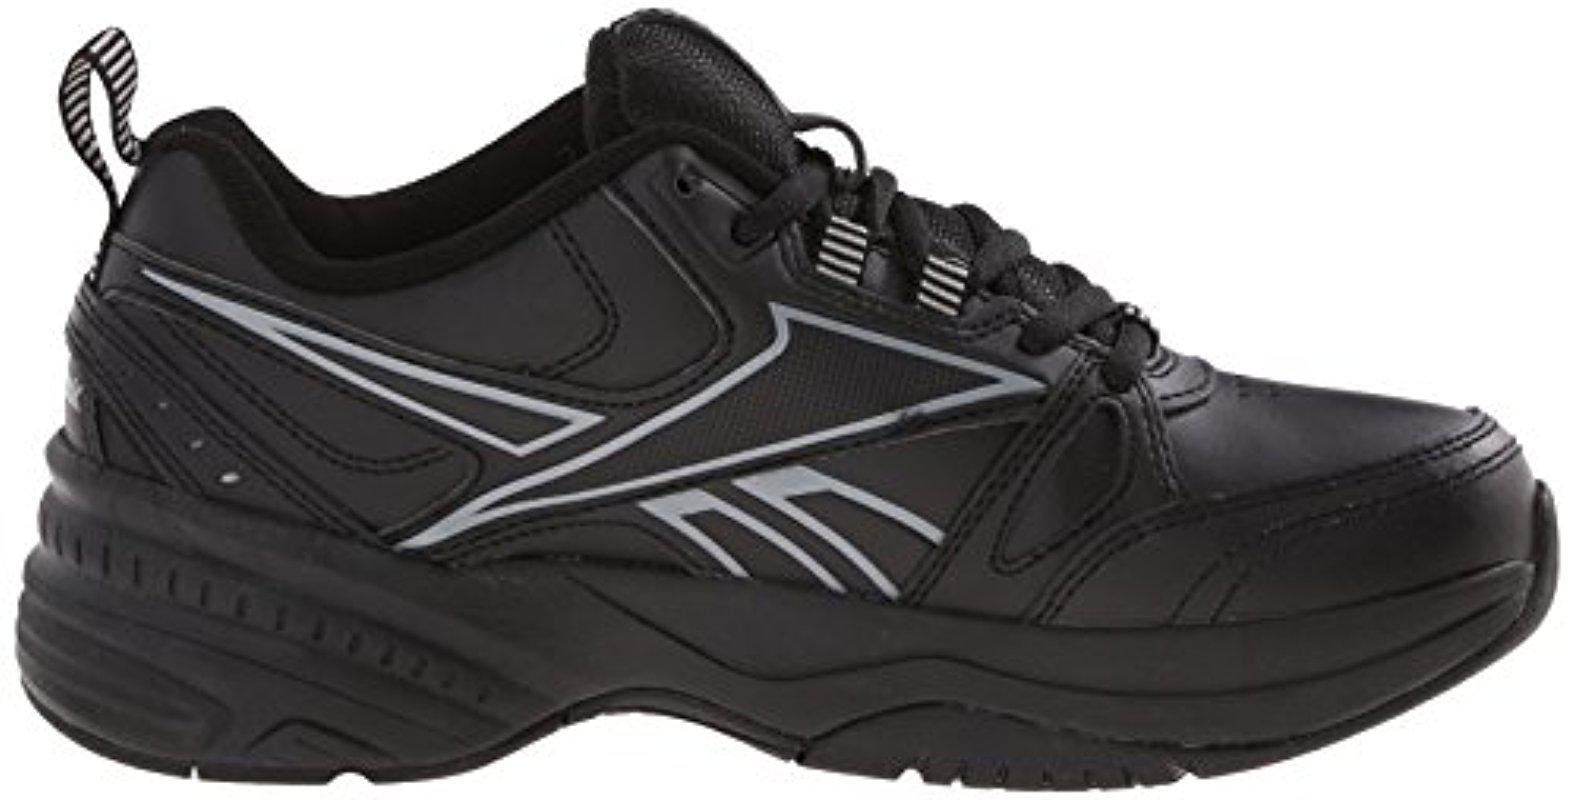 Reebok Leather Royal Trainer Mt Cross-trainer Shoe in Black for Men - Lyst